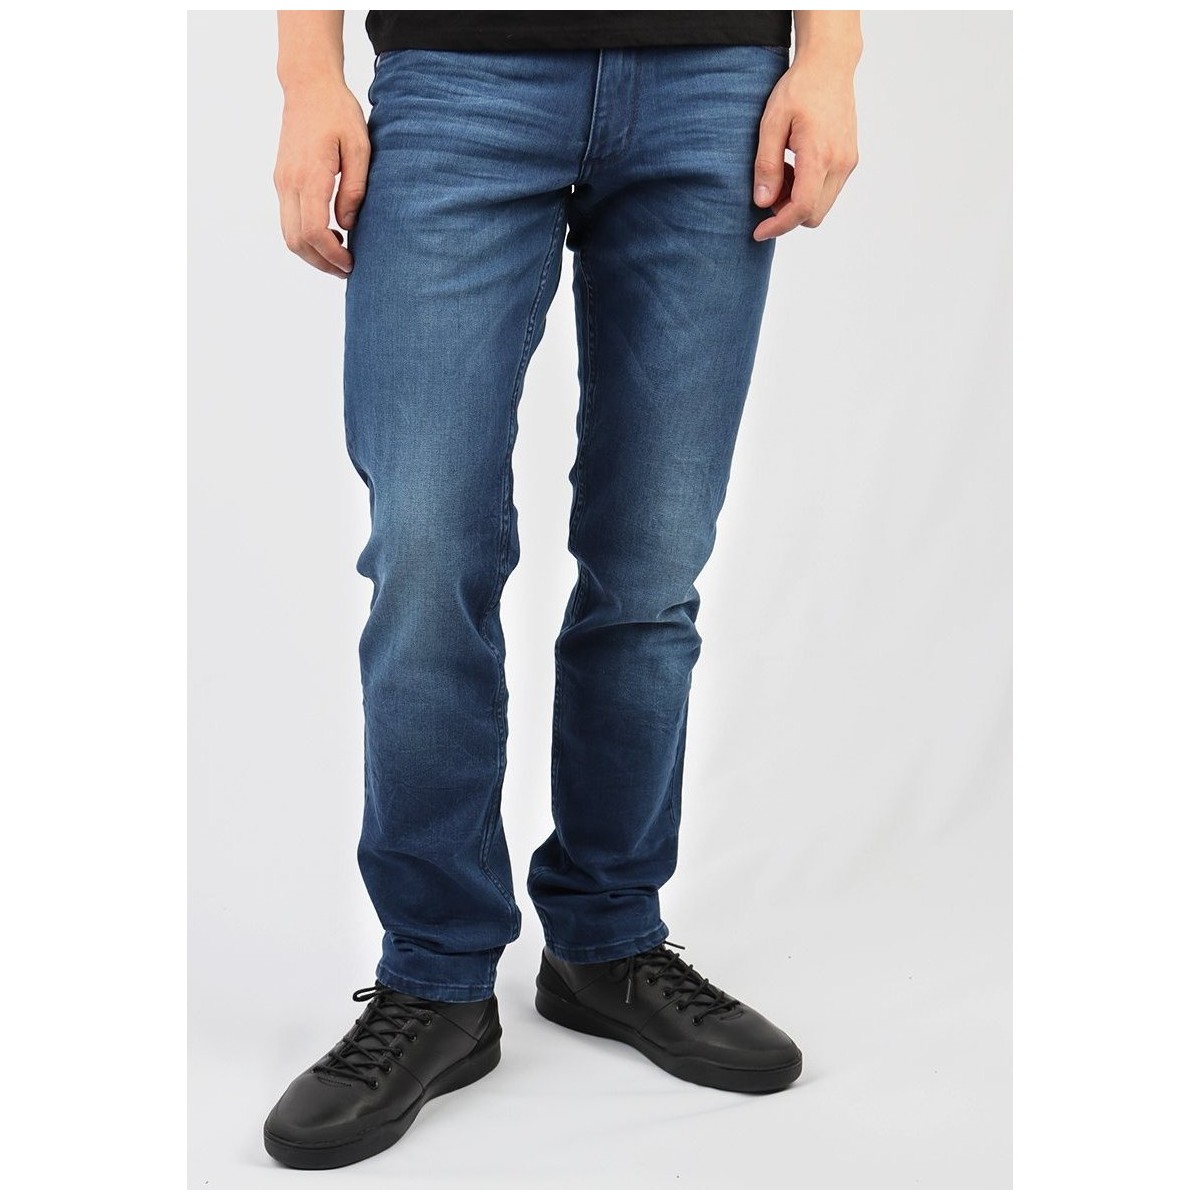 Vêtements Homme Jeans droit Wrangler Greensboro W15QEH76 Bleu